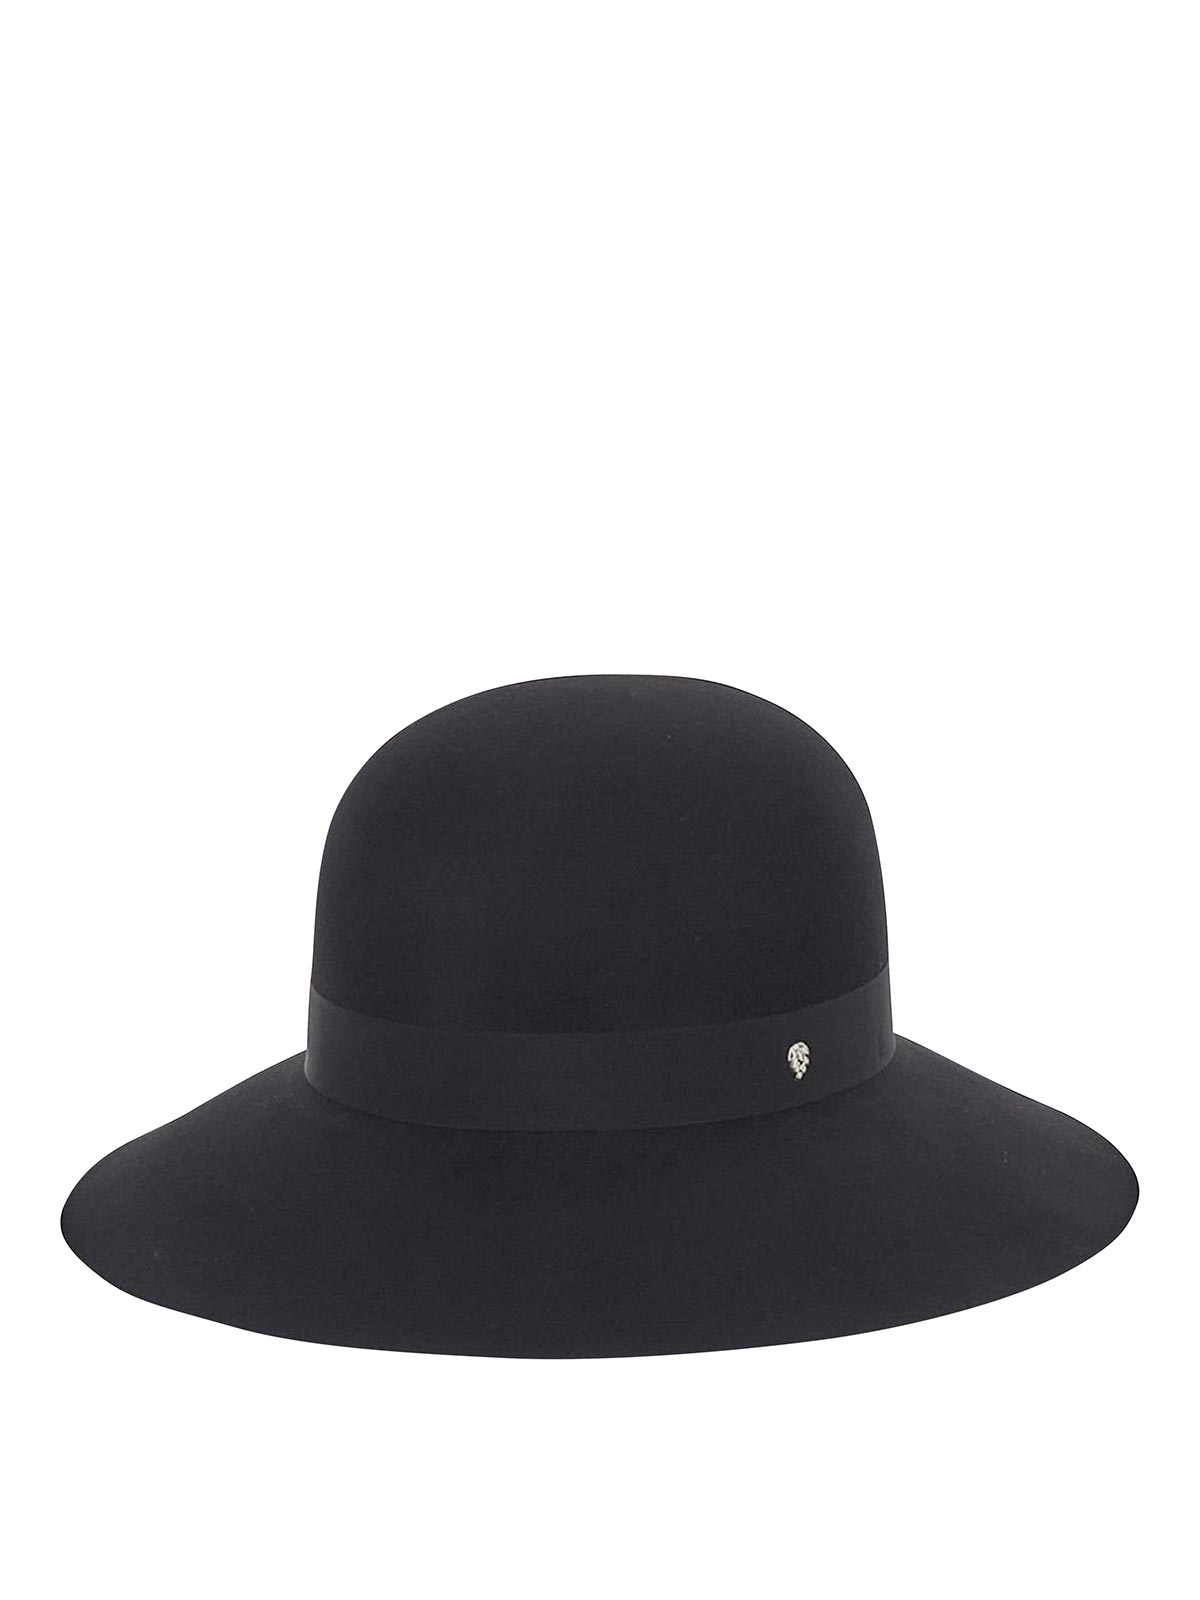 Helen Kaminski Hat In Black With Ribbed Band